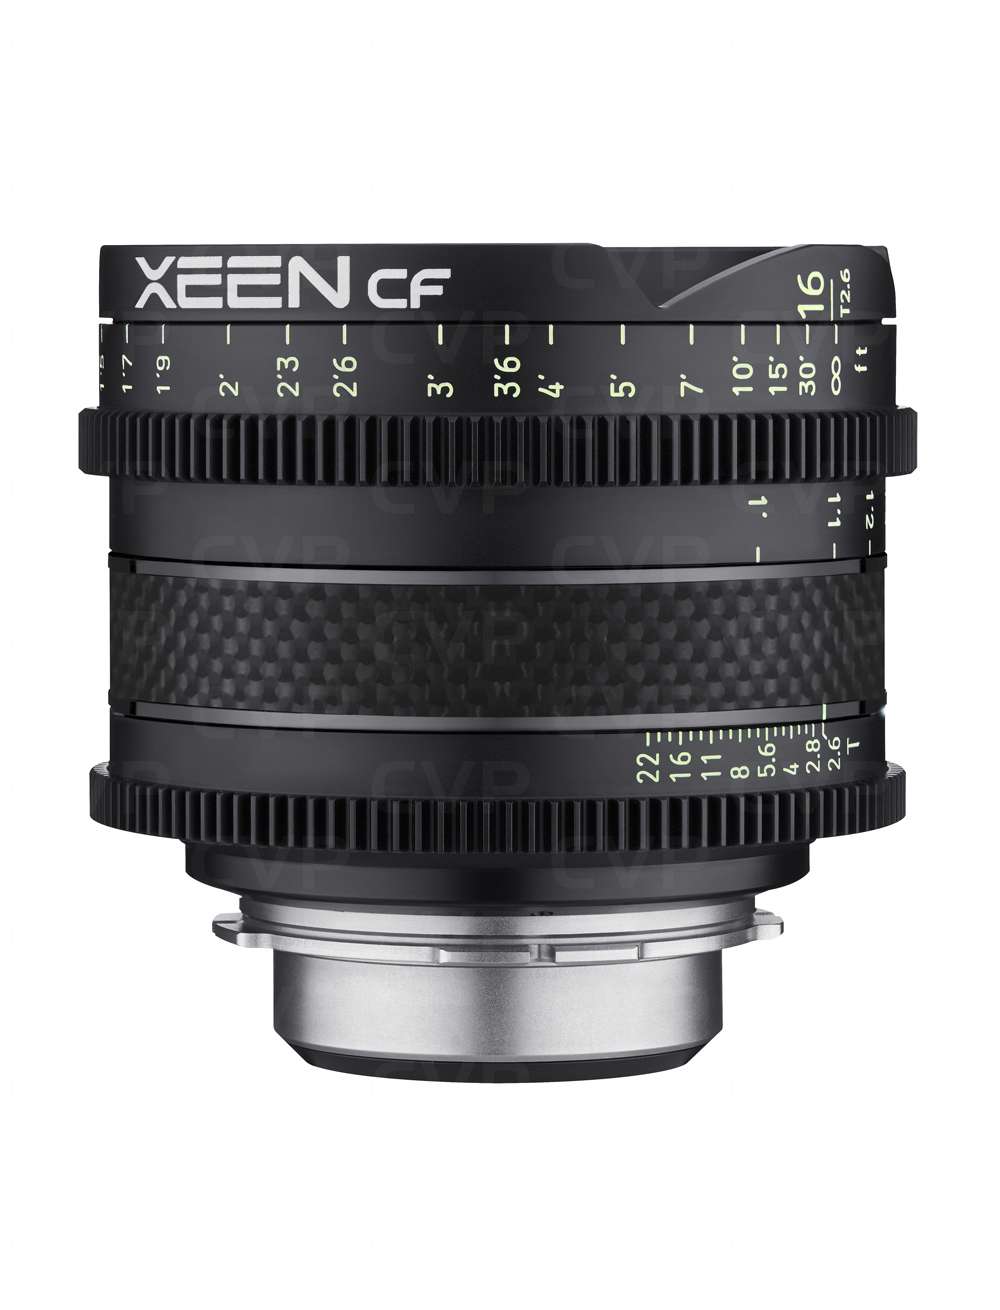 XEEN CF 16mm T2.6 - échelle en METRE pour monture SONY